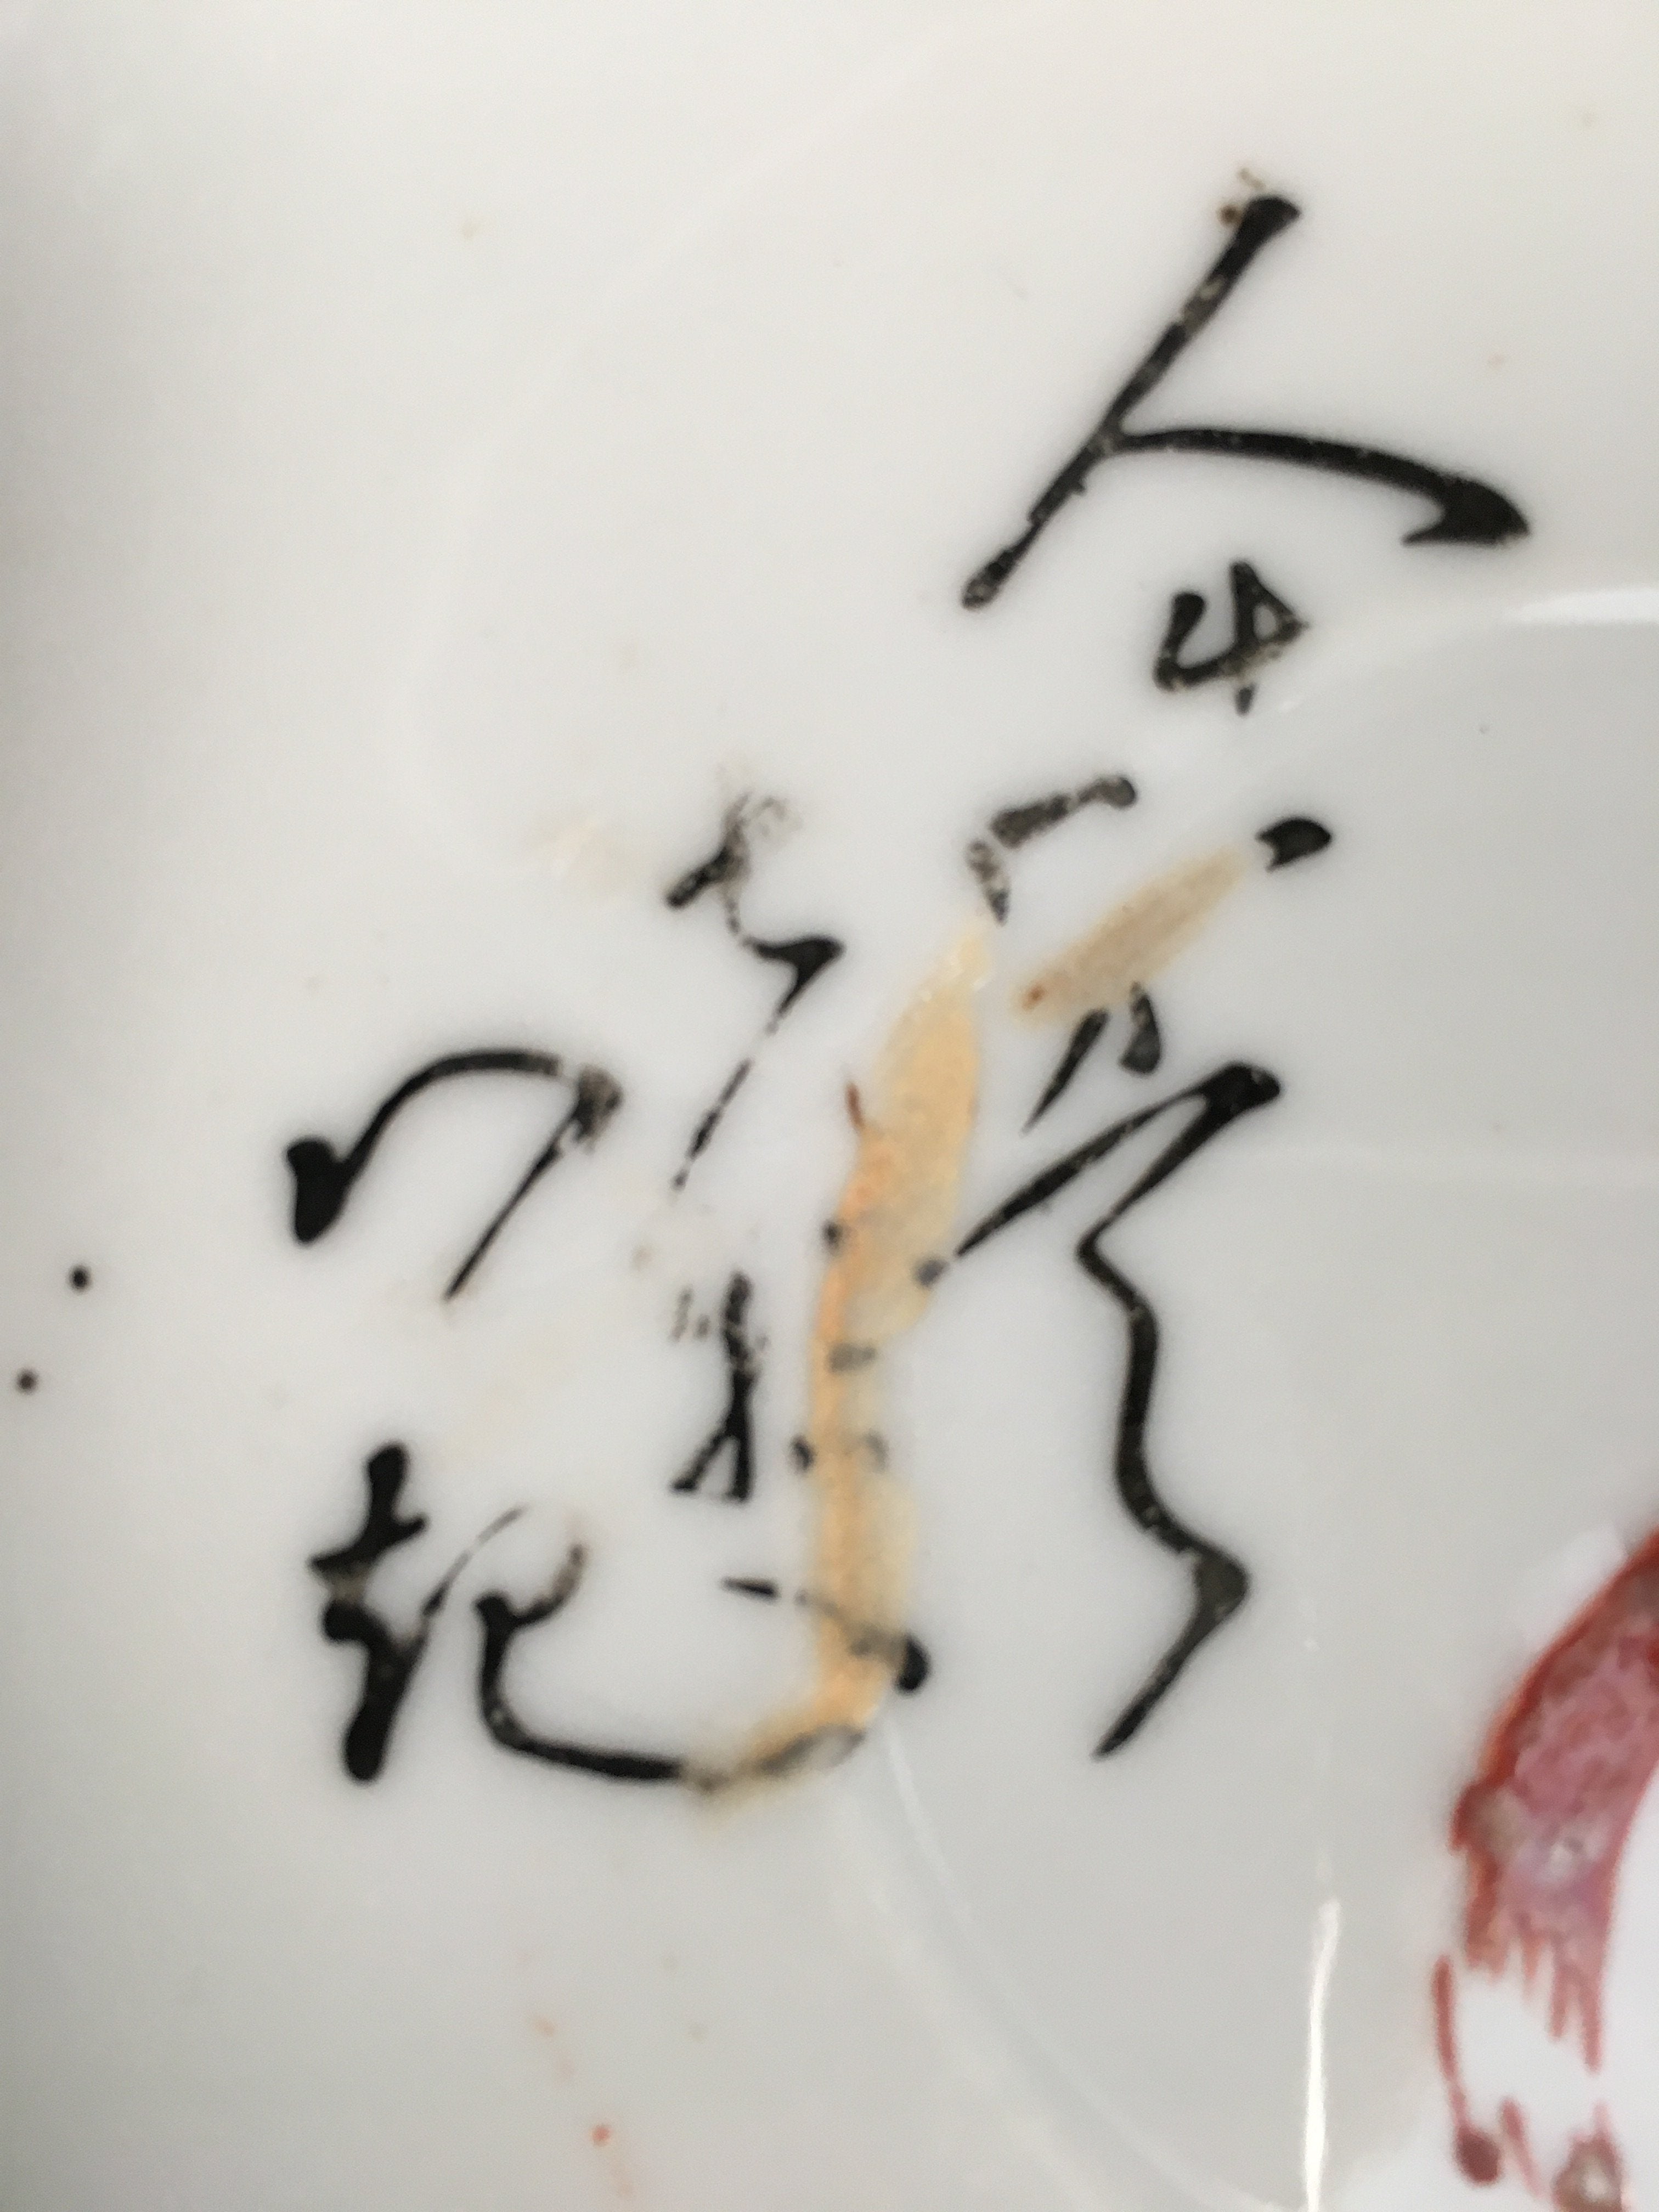 Japanese Porcelain Drink Saucer Vtg Chataku Coaster Daruma Kanji PP373